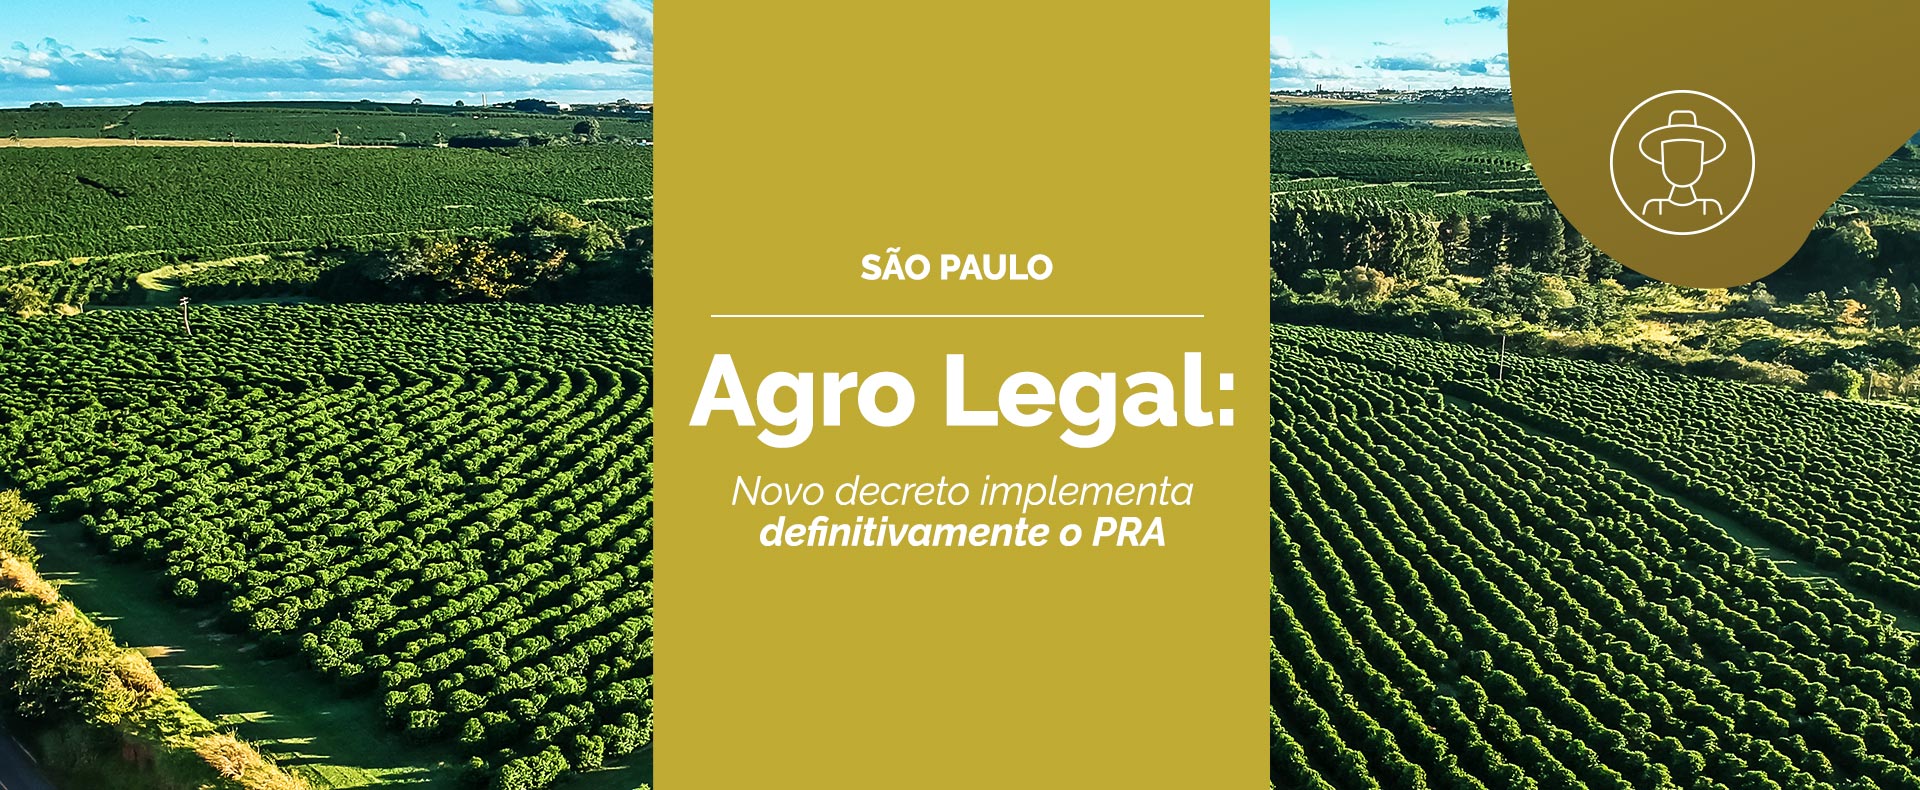 Agro Legal: novo decreto implementa definitivamente o PRA